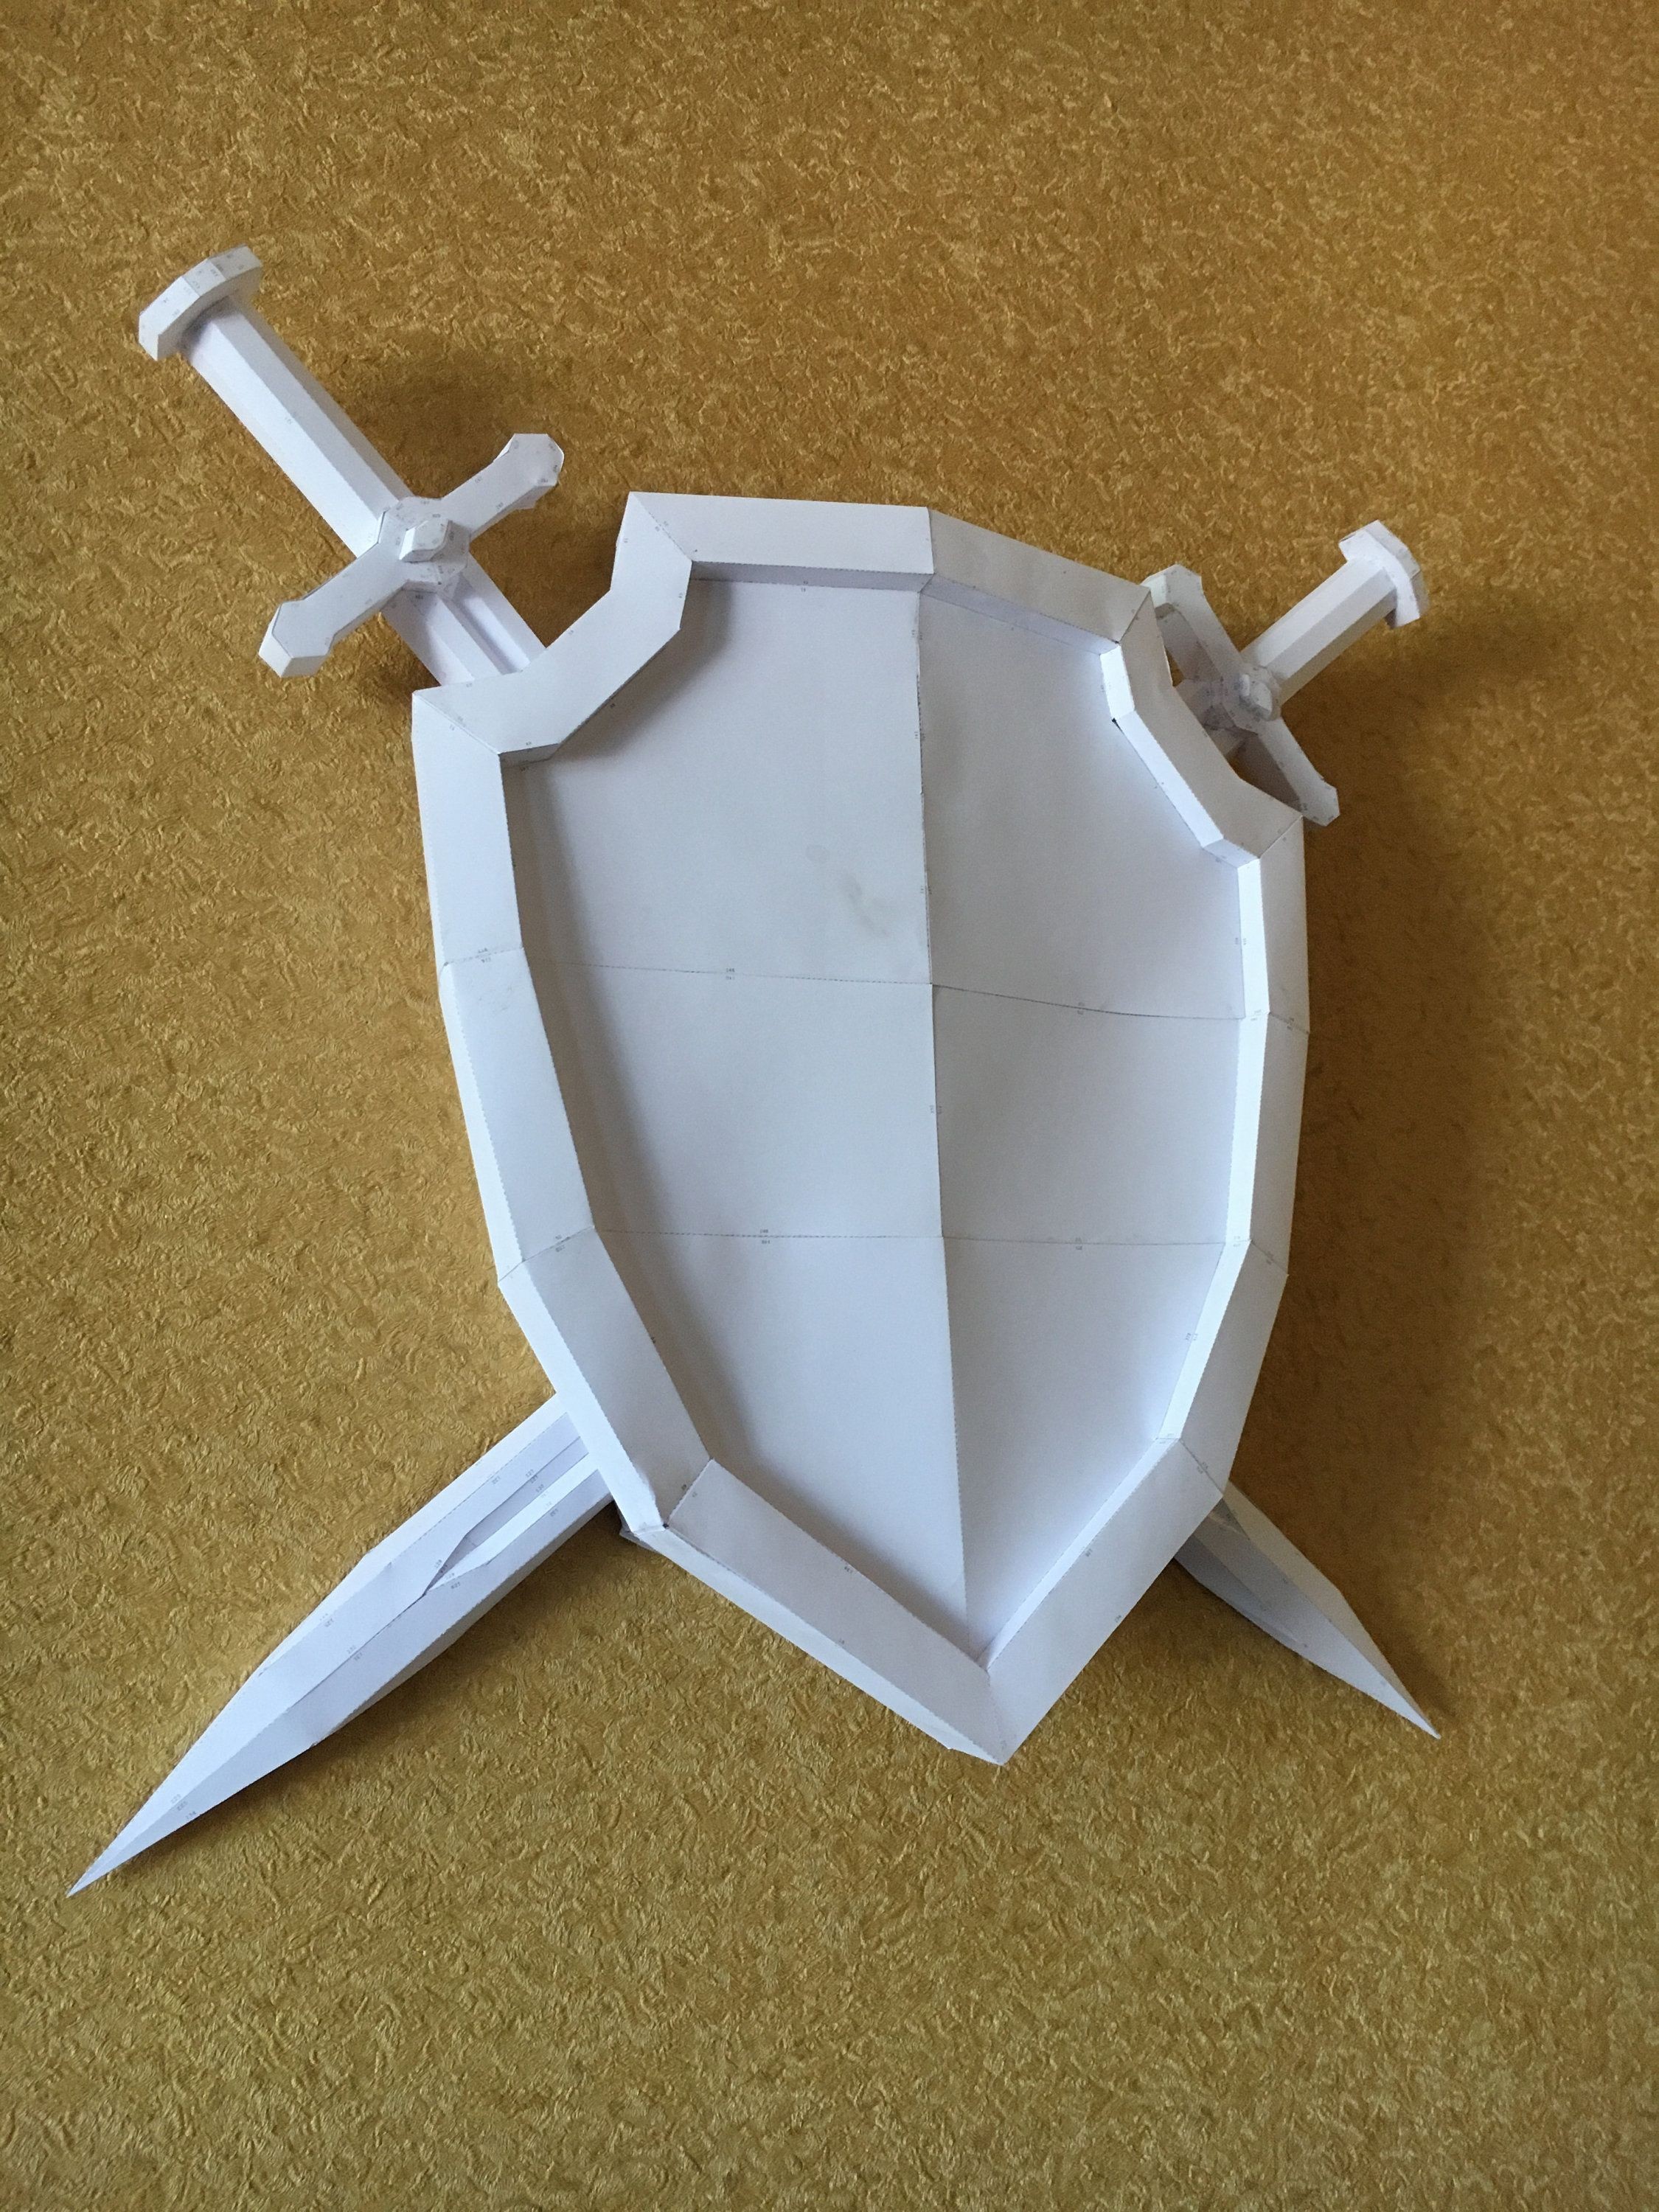 Papercraft Techniques Sword Shield Diy Papercraft Model ÐÑÐ¼Ð°Ð¶Ð½ÑÐµ Ð¸Ð·Ð´ÐµÐ Ð¸Ñ